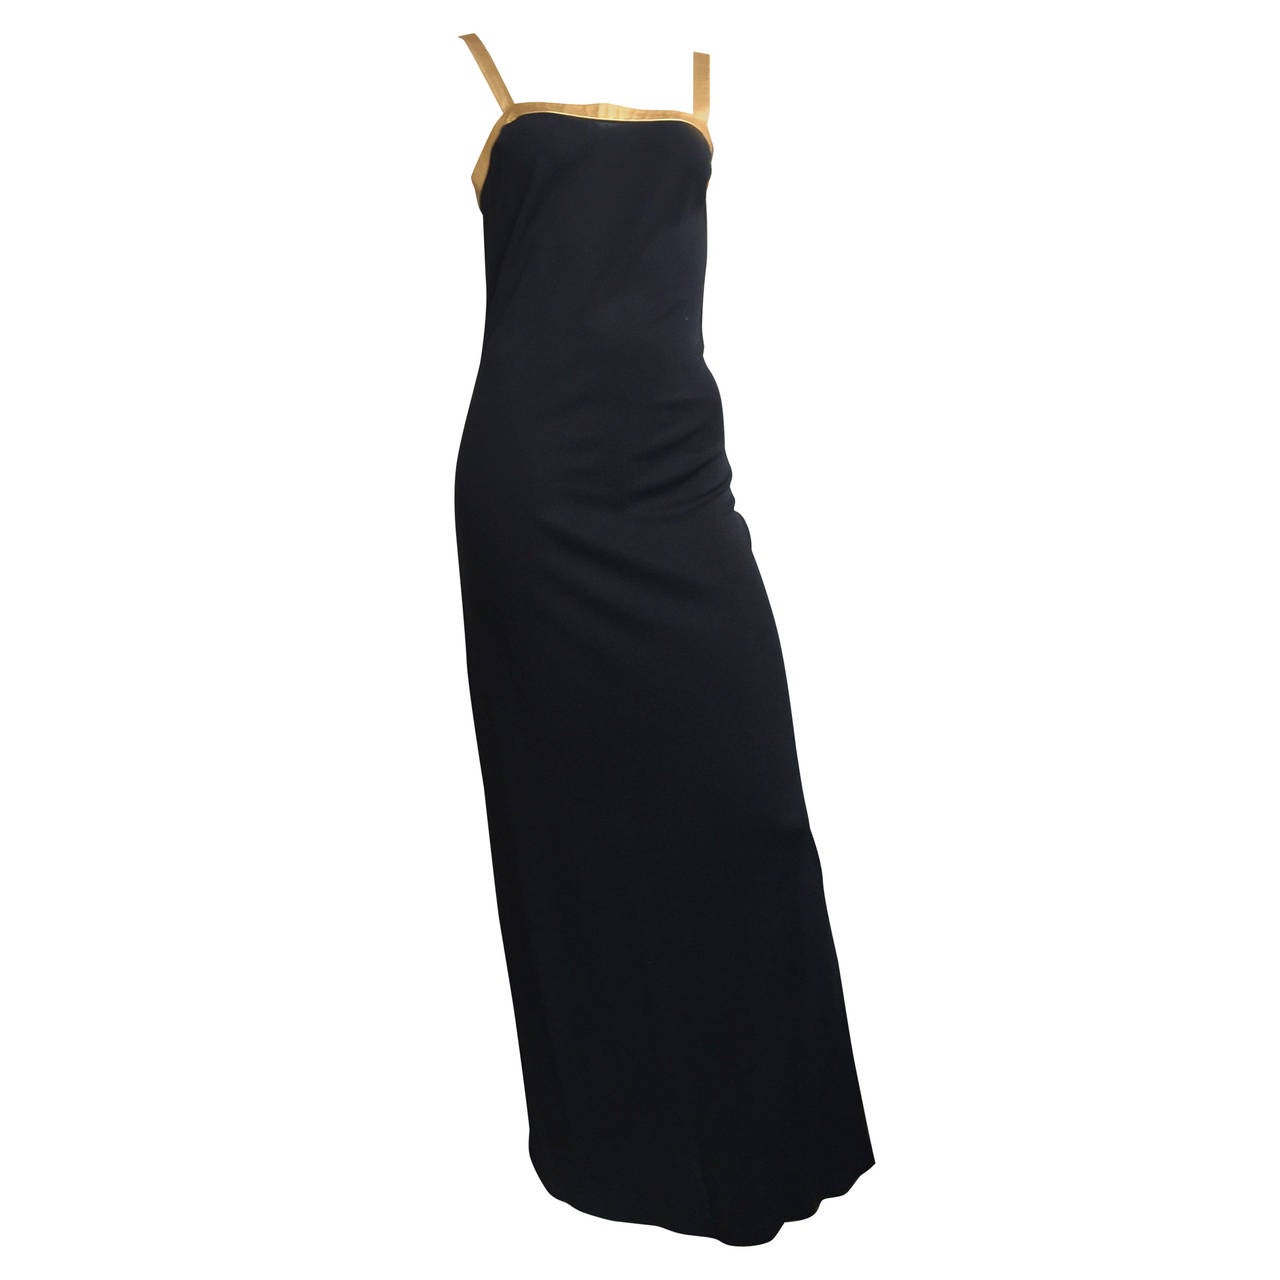 Ralph Lauren Black Gown Size 6.